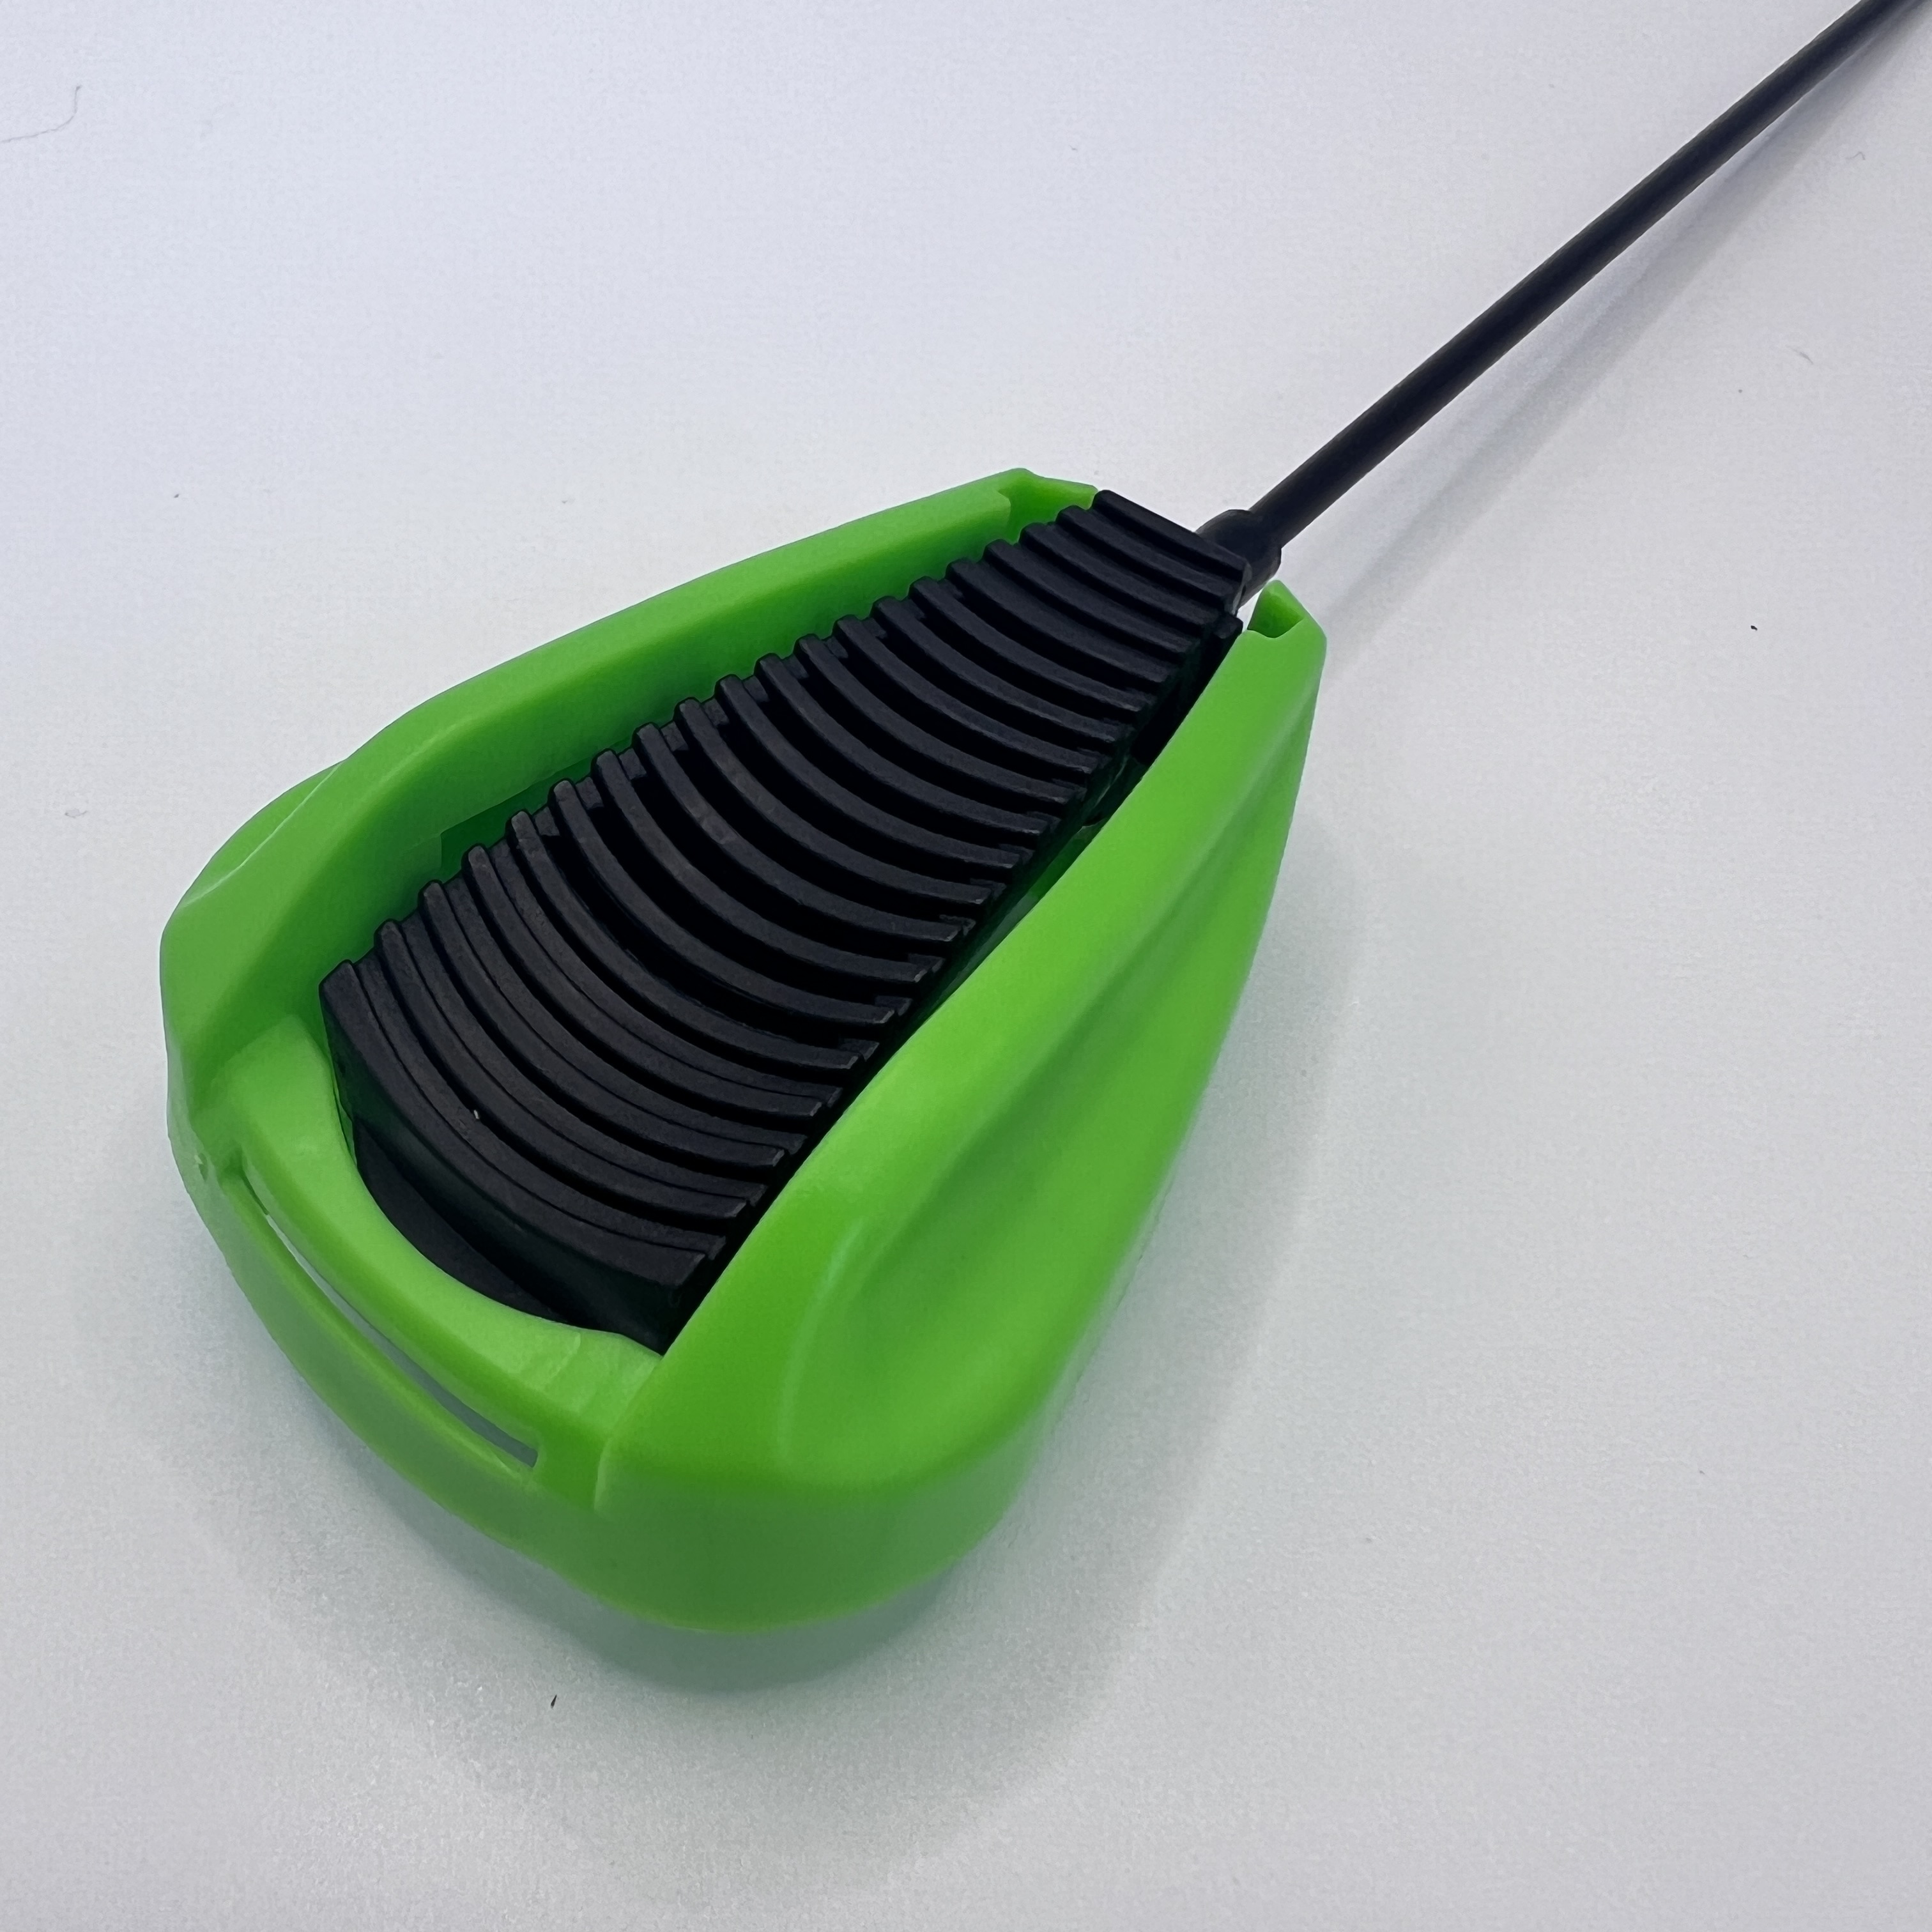  Adjustable Aerosol Spray Nozzle for Gardening - Versatile and Efficient